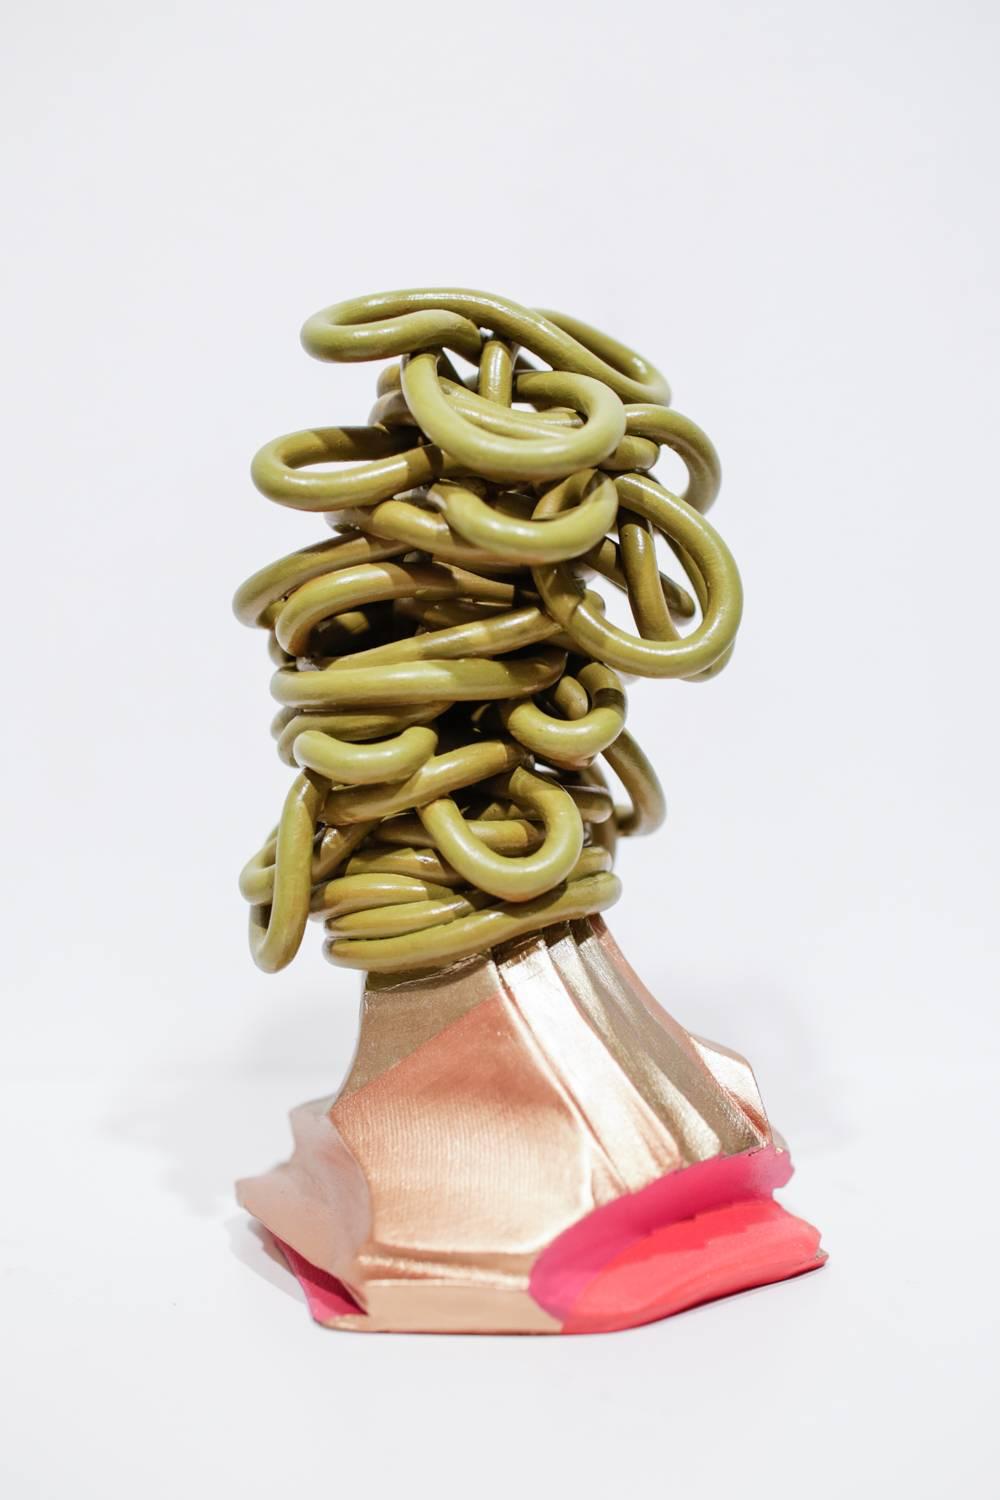 john oliver banana sculpture